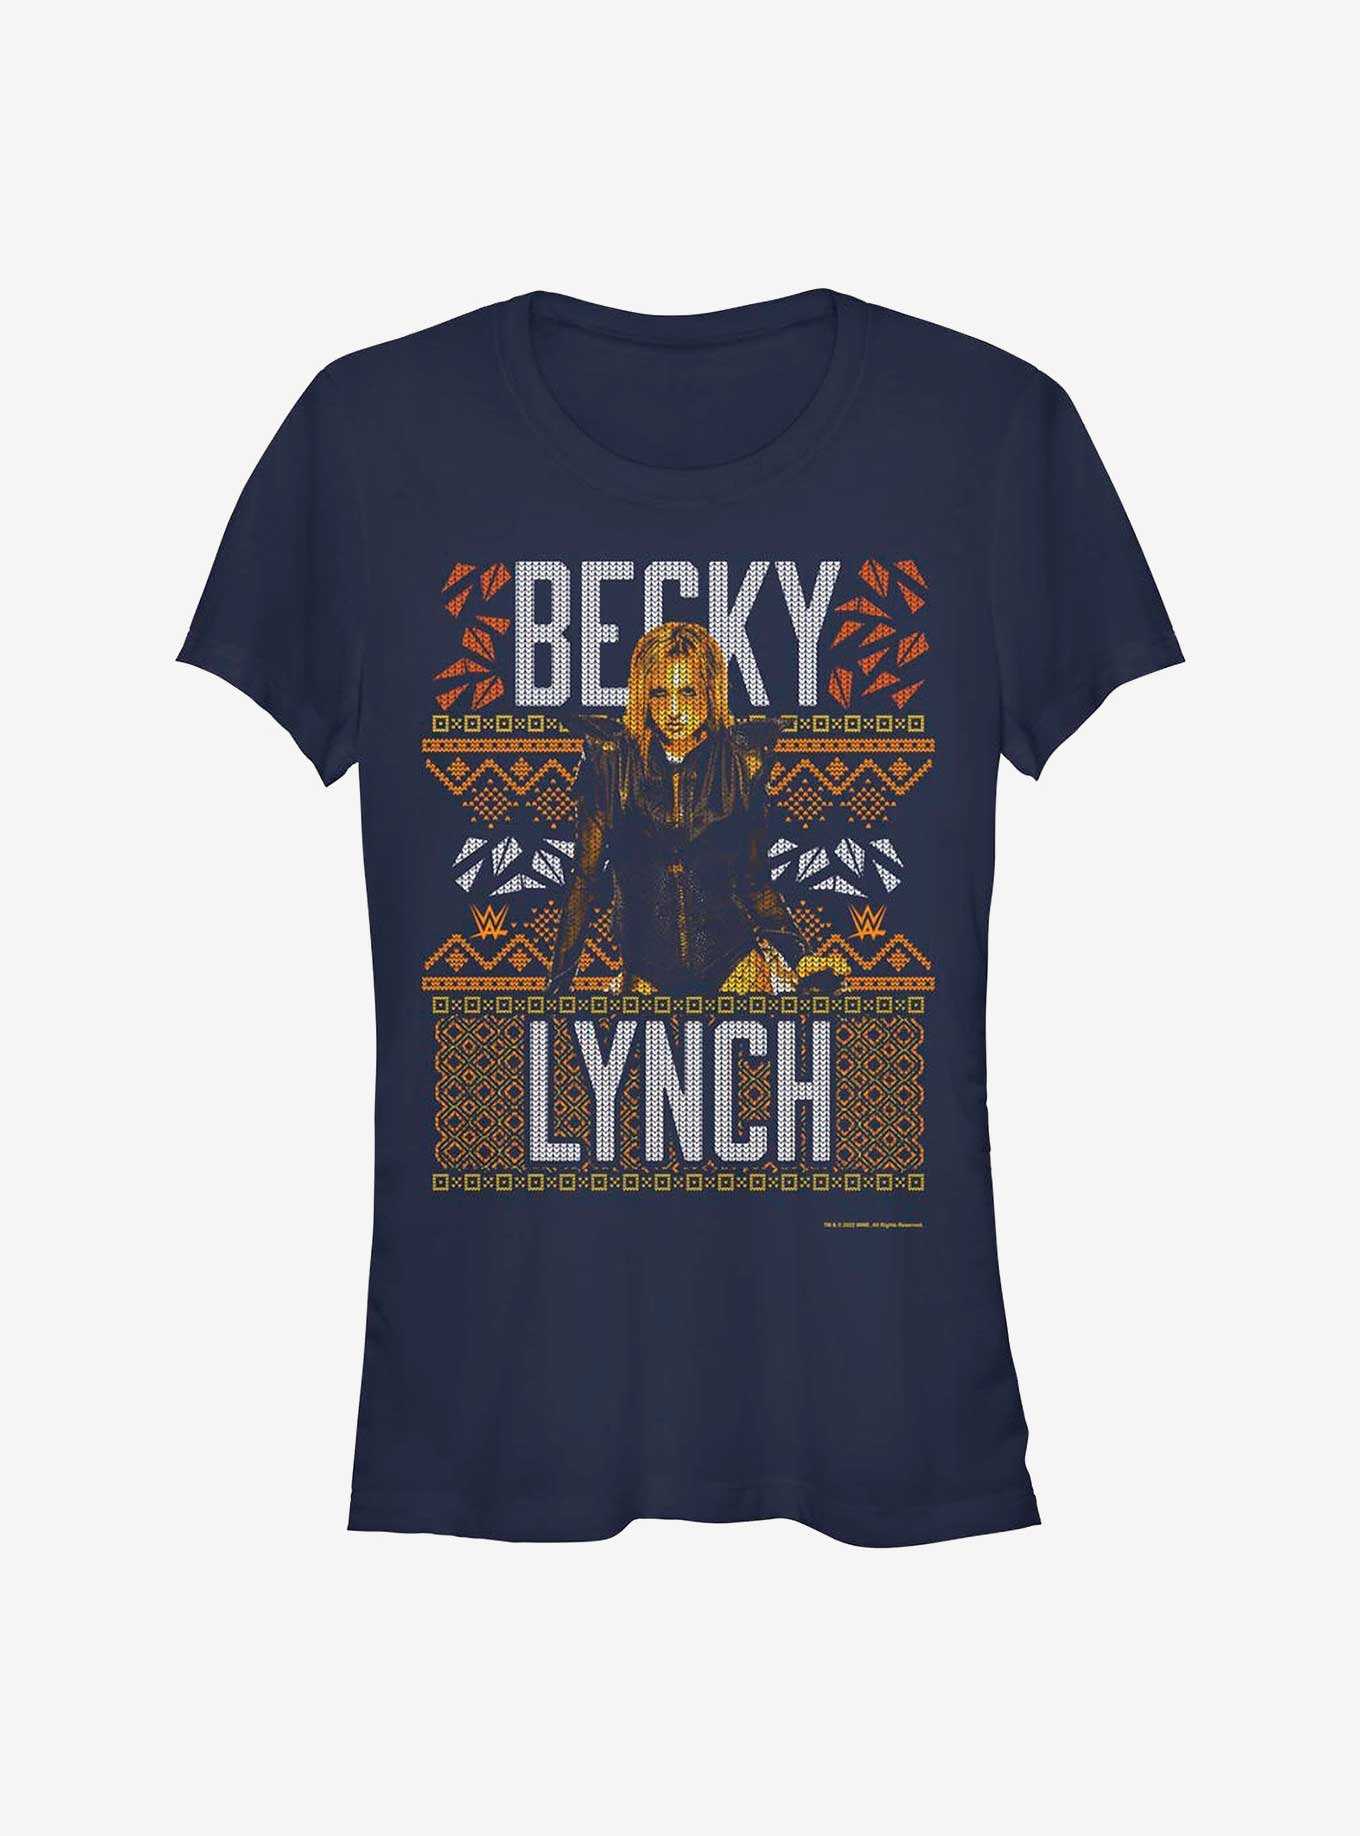 WWE Becky Lynch Ugly Christmas Girls T-Shirt, , hi-res